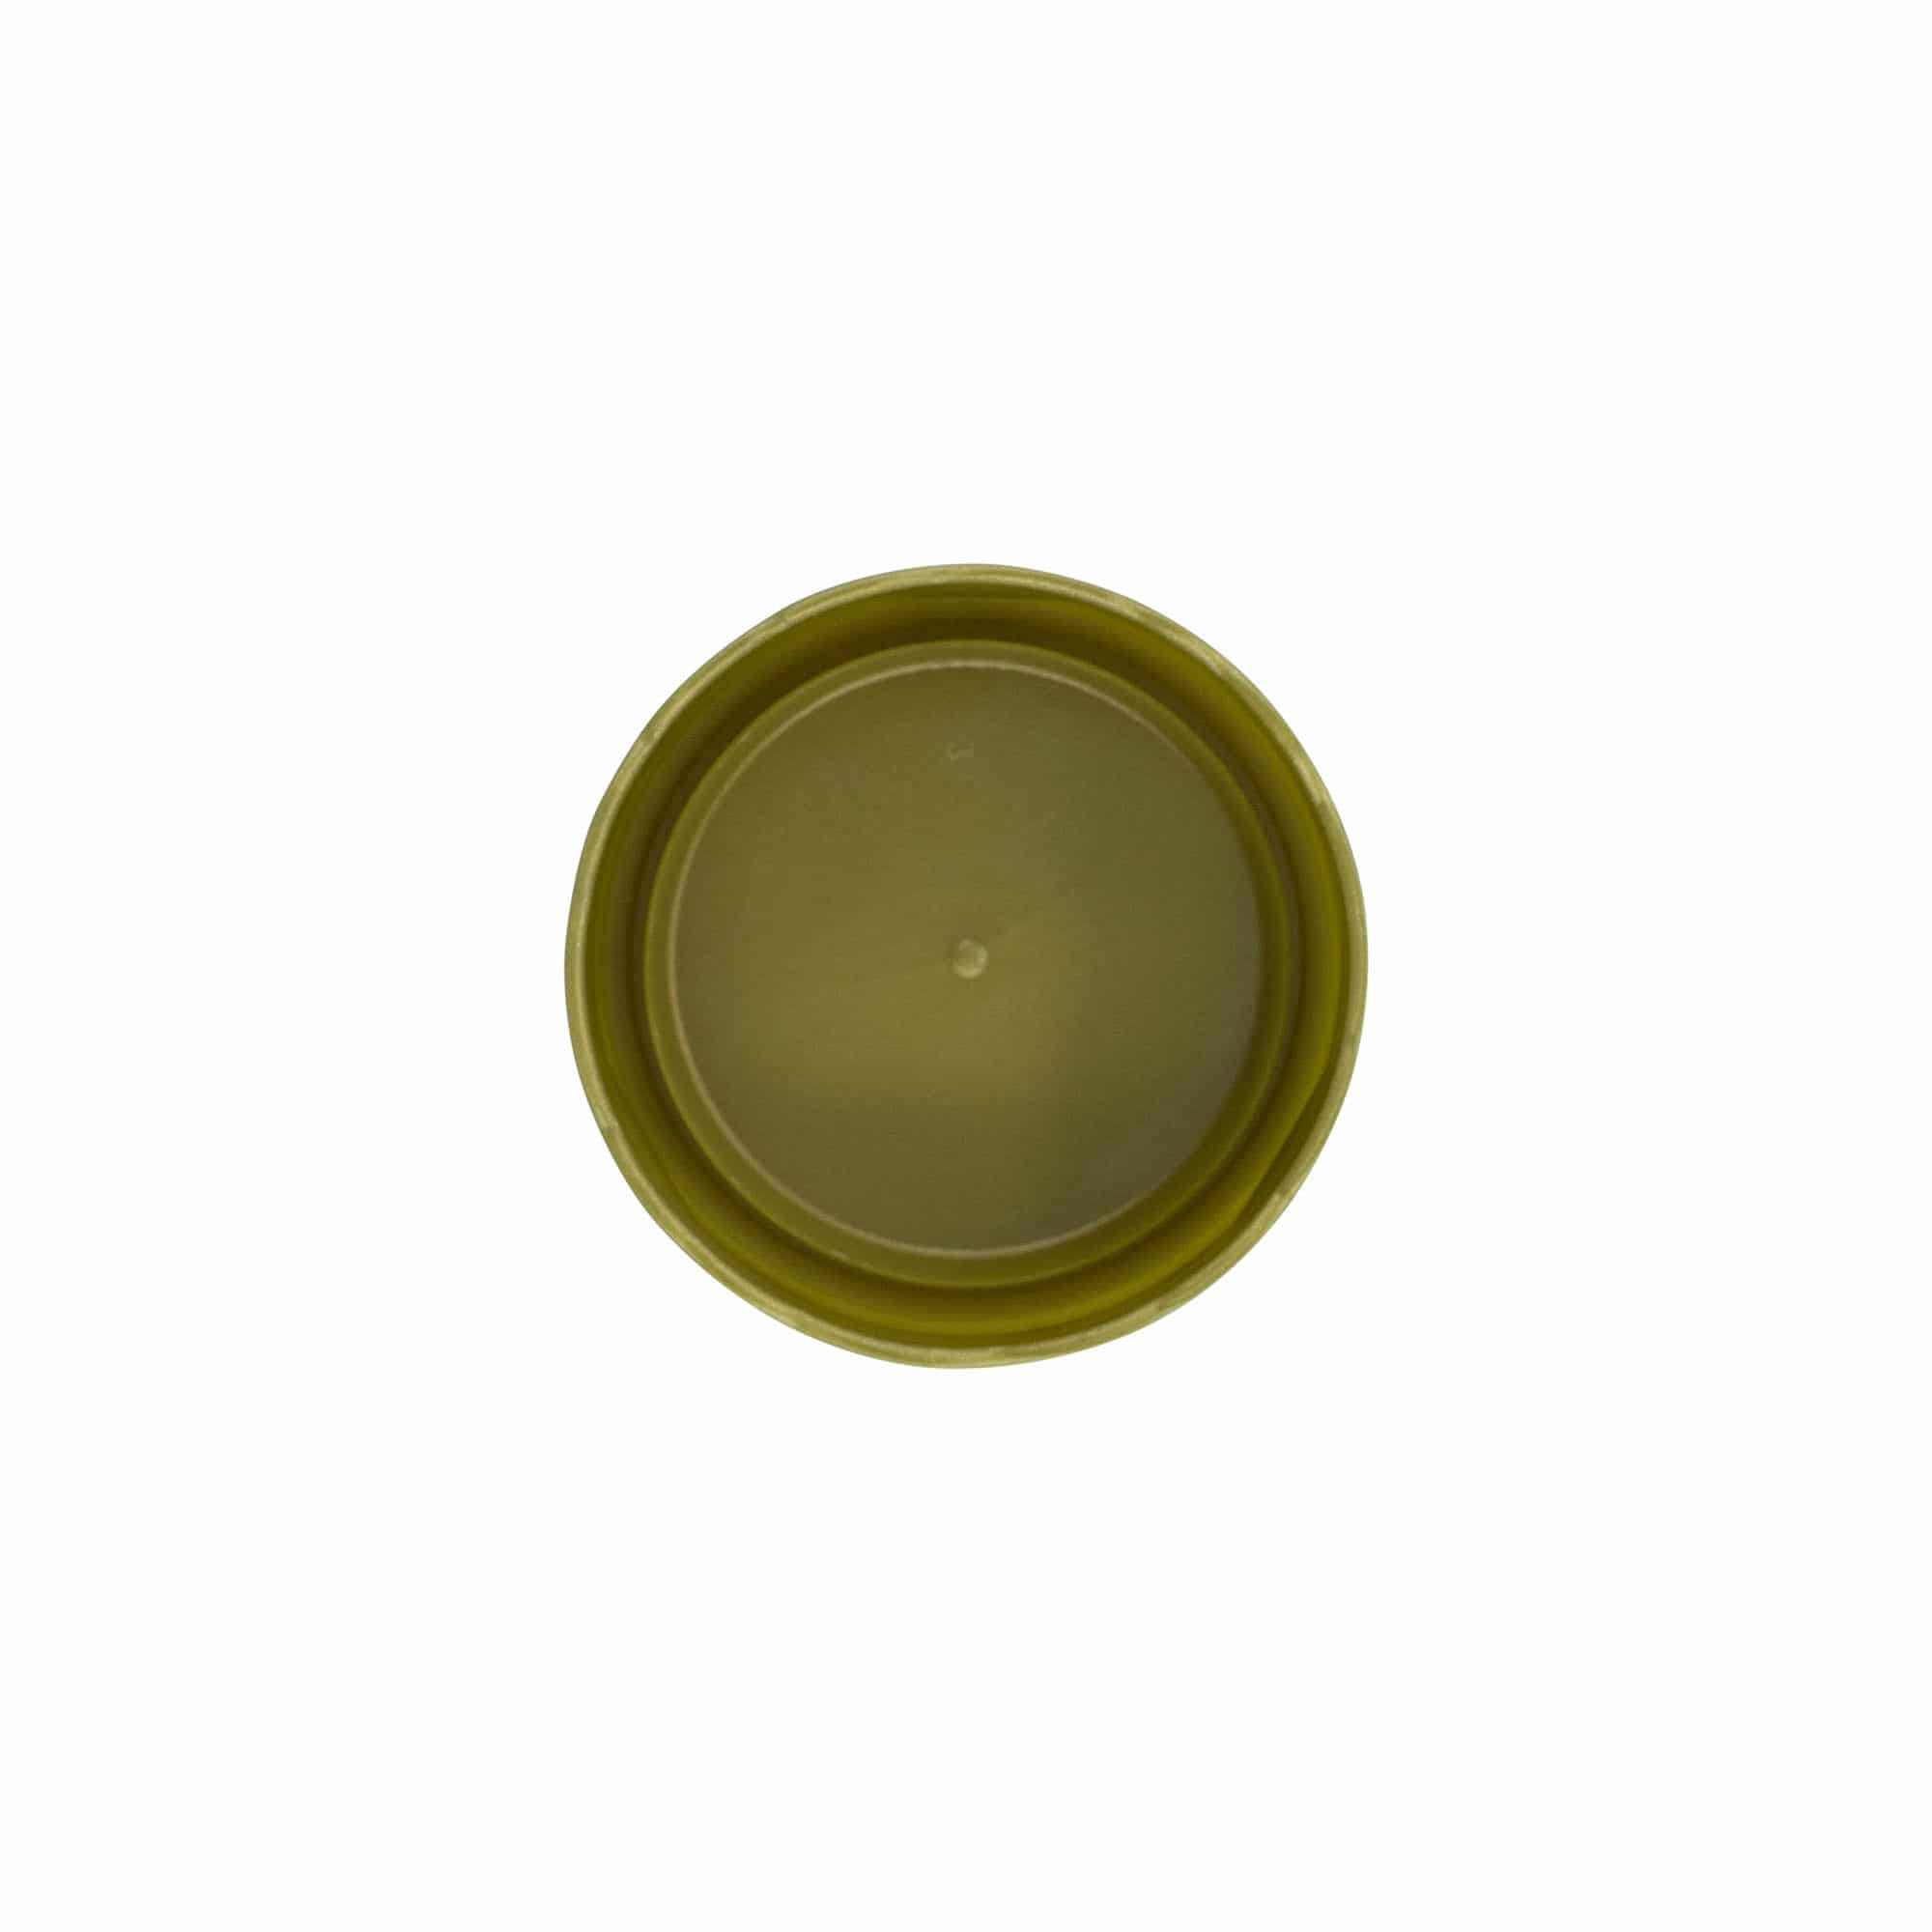 Slip lid for narrow neck ceramic pot, HDPE plastic, gold